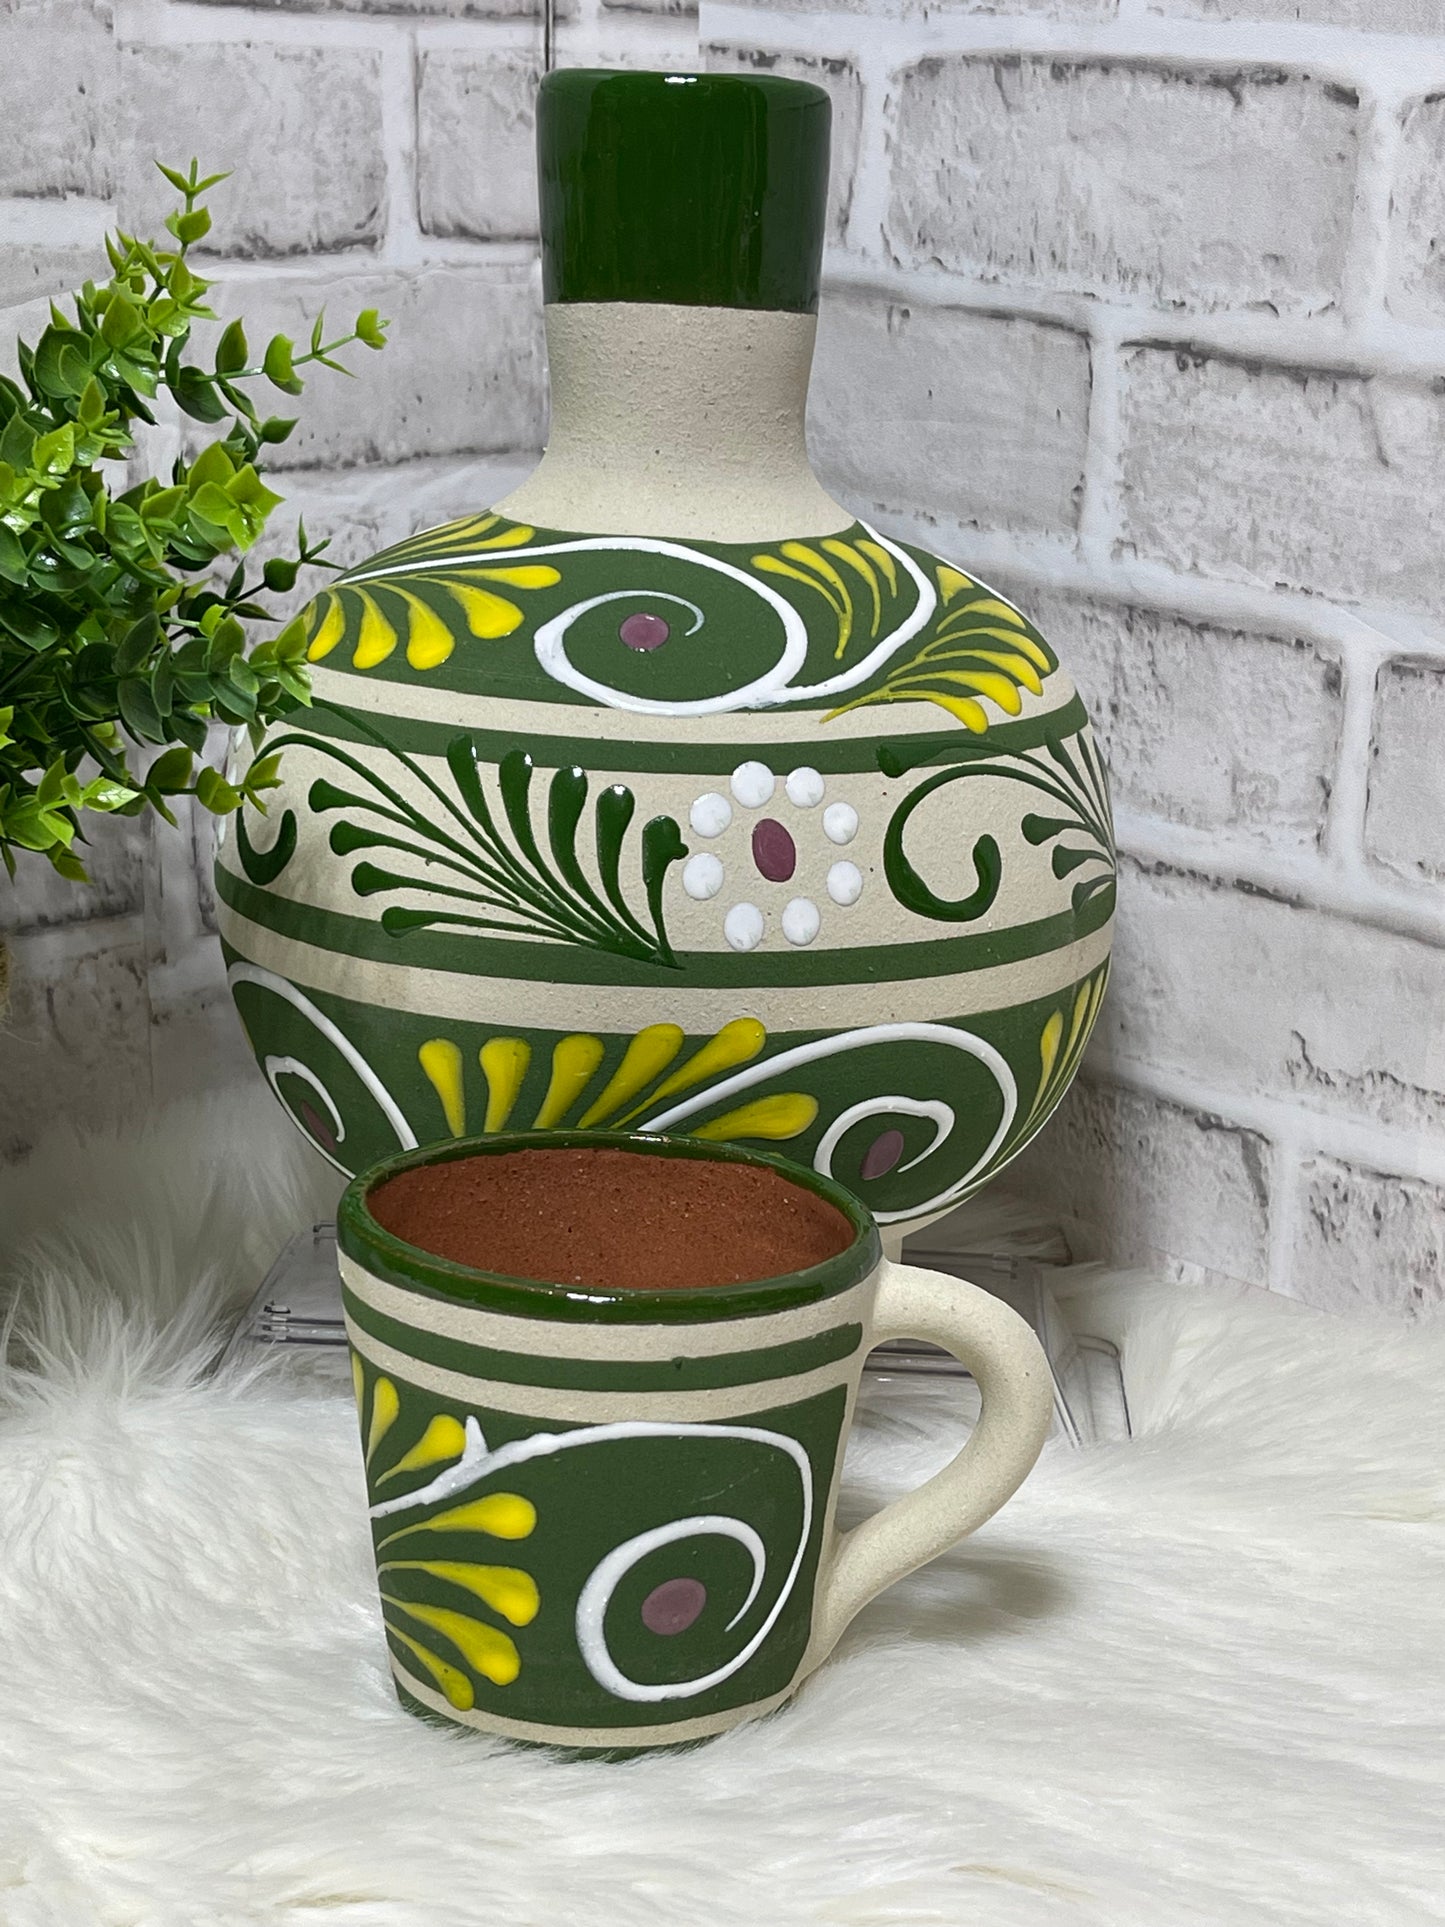 Mexican pottery ceramic/terracotta water jug-decanter-botellon de barro engobado